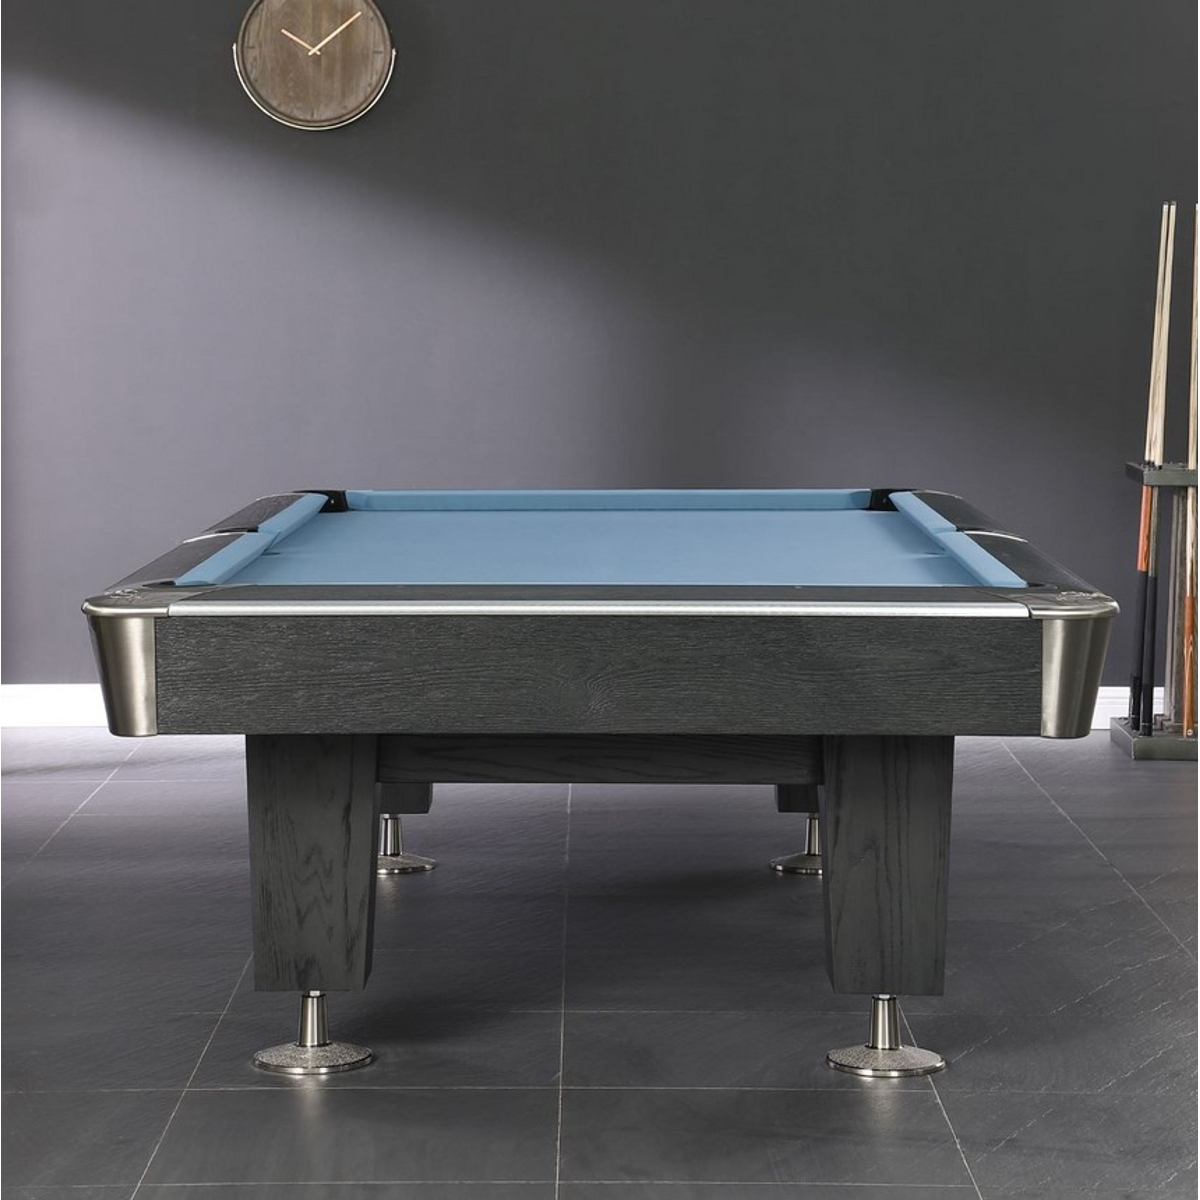  Top Table Lexor Pooltafel X-Treme II Black Wood Steel 9FT